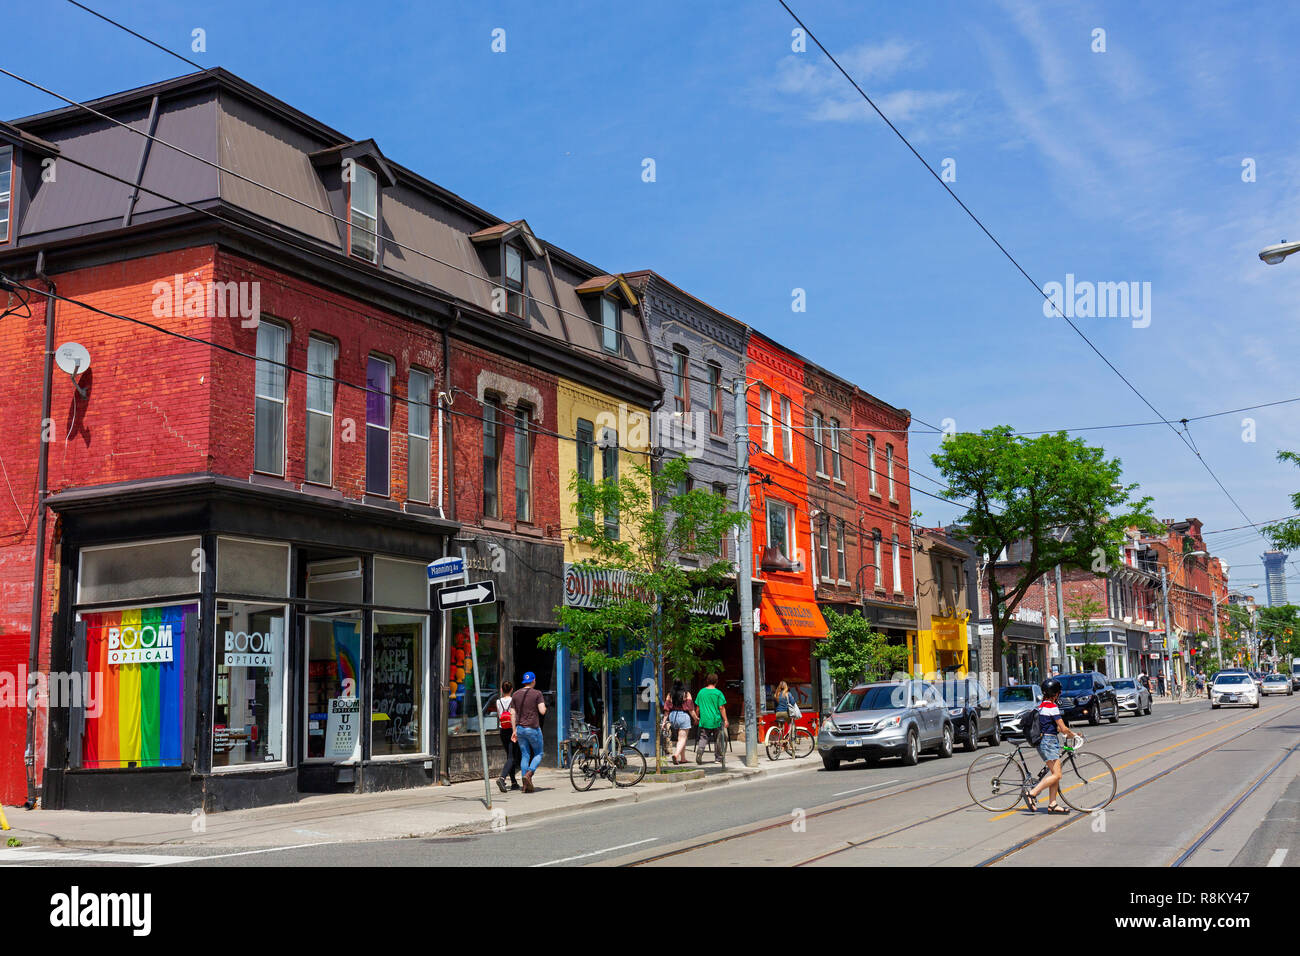 Canada, Province of Ontario, City of Toronto, Queen Street West